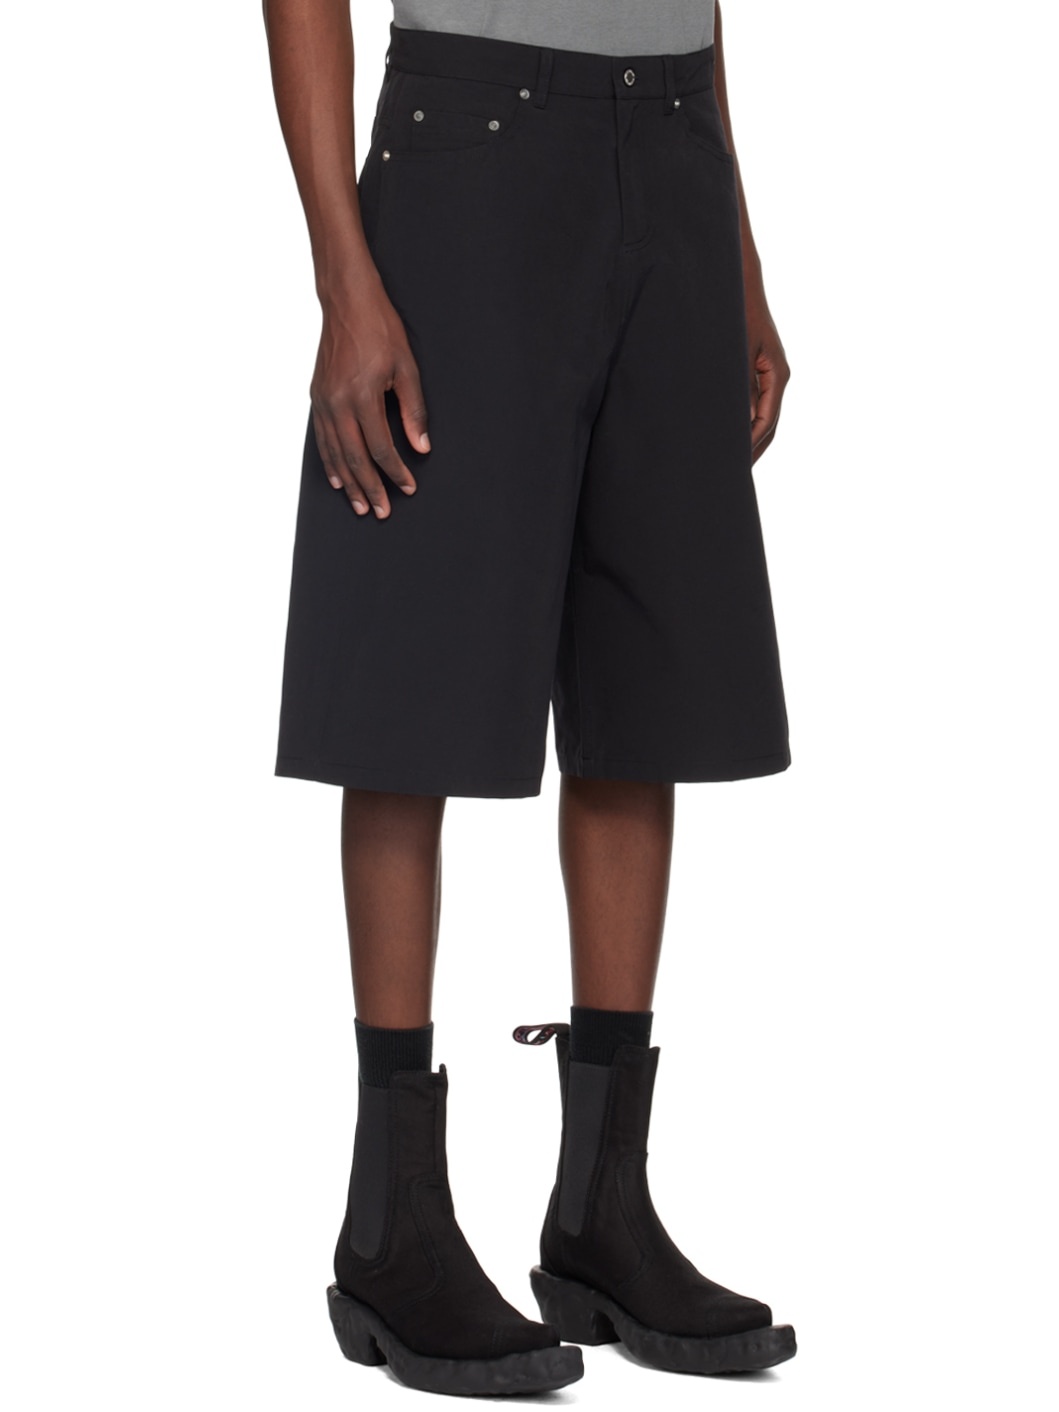 Black Tech Shorts - 2